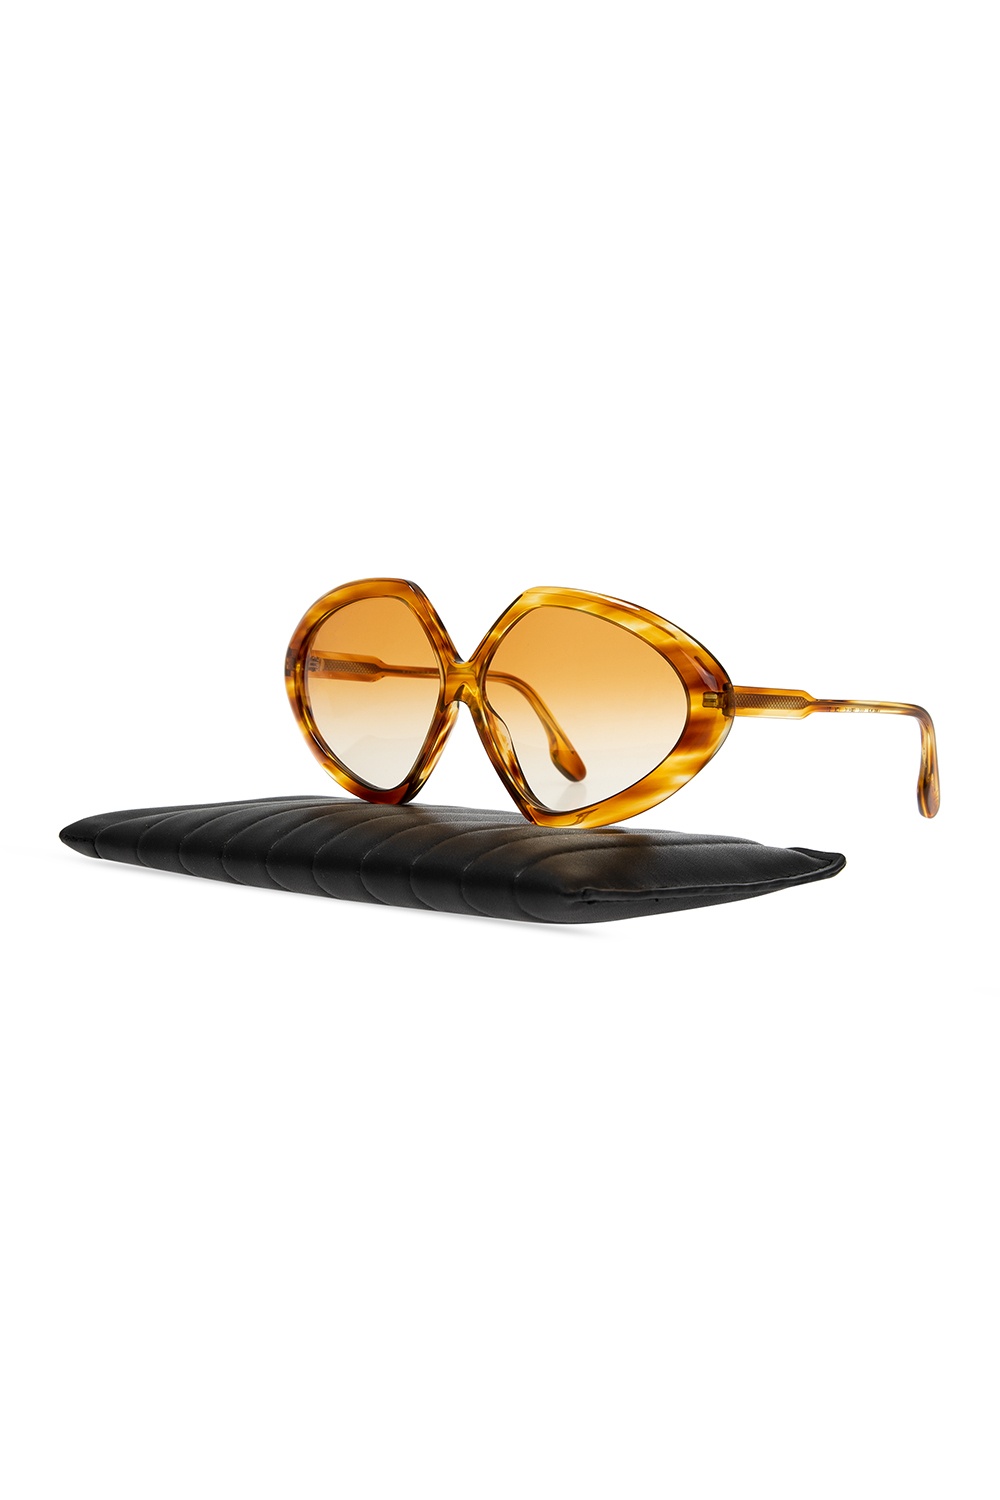 Victoria Beckham Saint Laurent Eyewear SL 423 cat-eye sunglasses